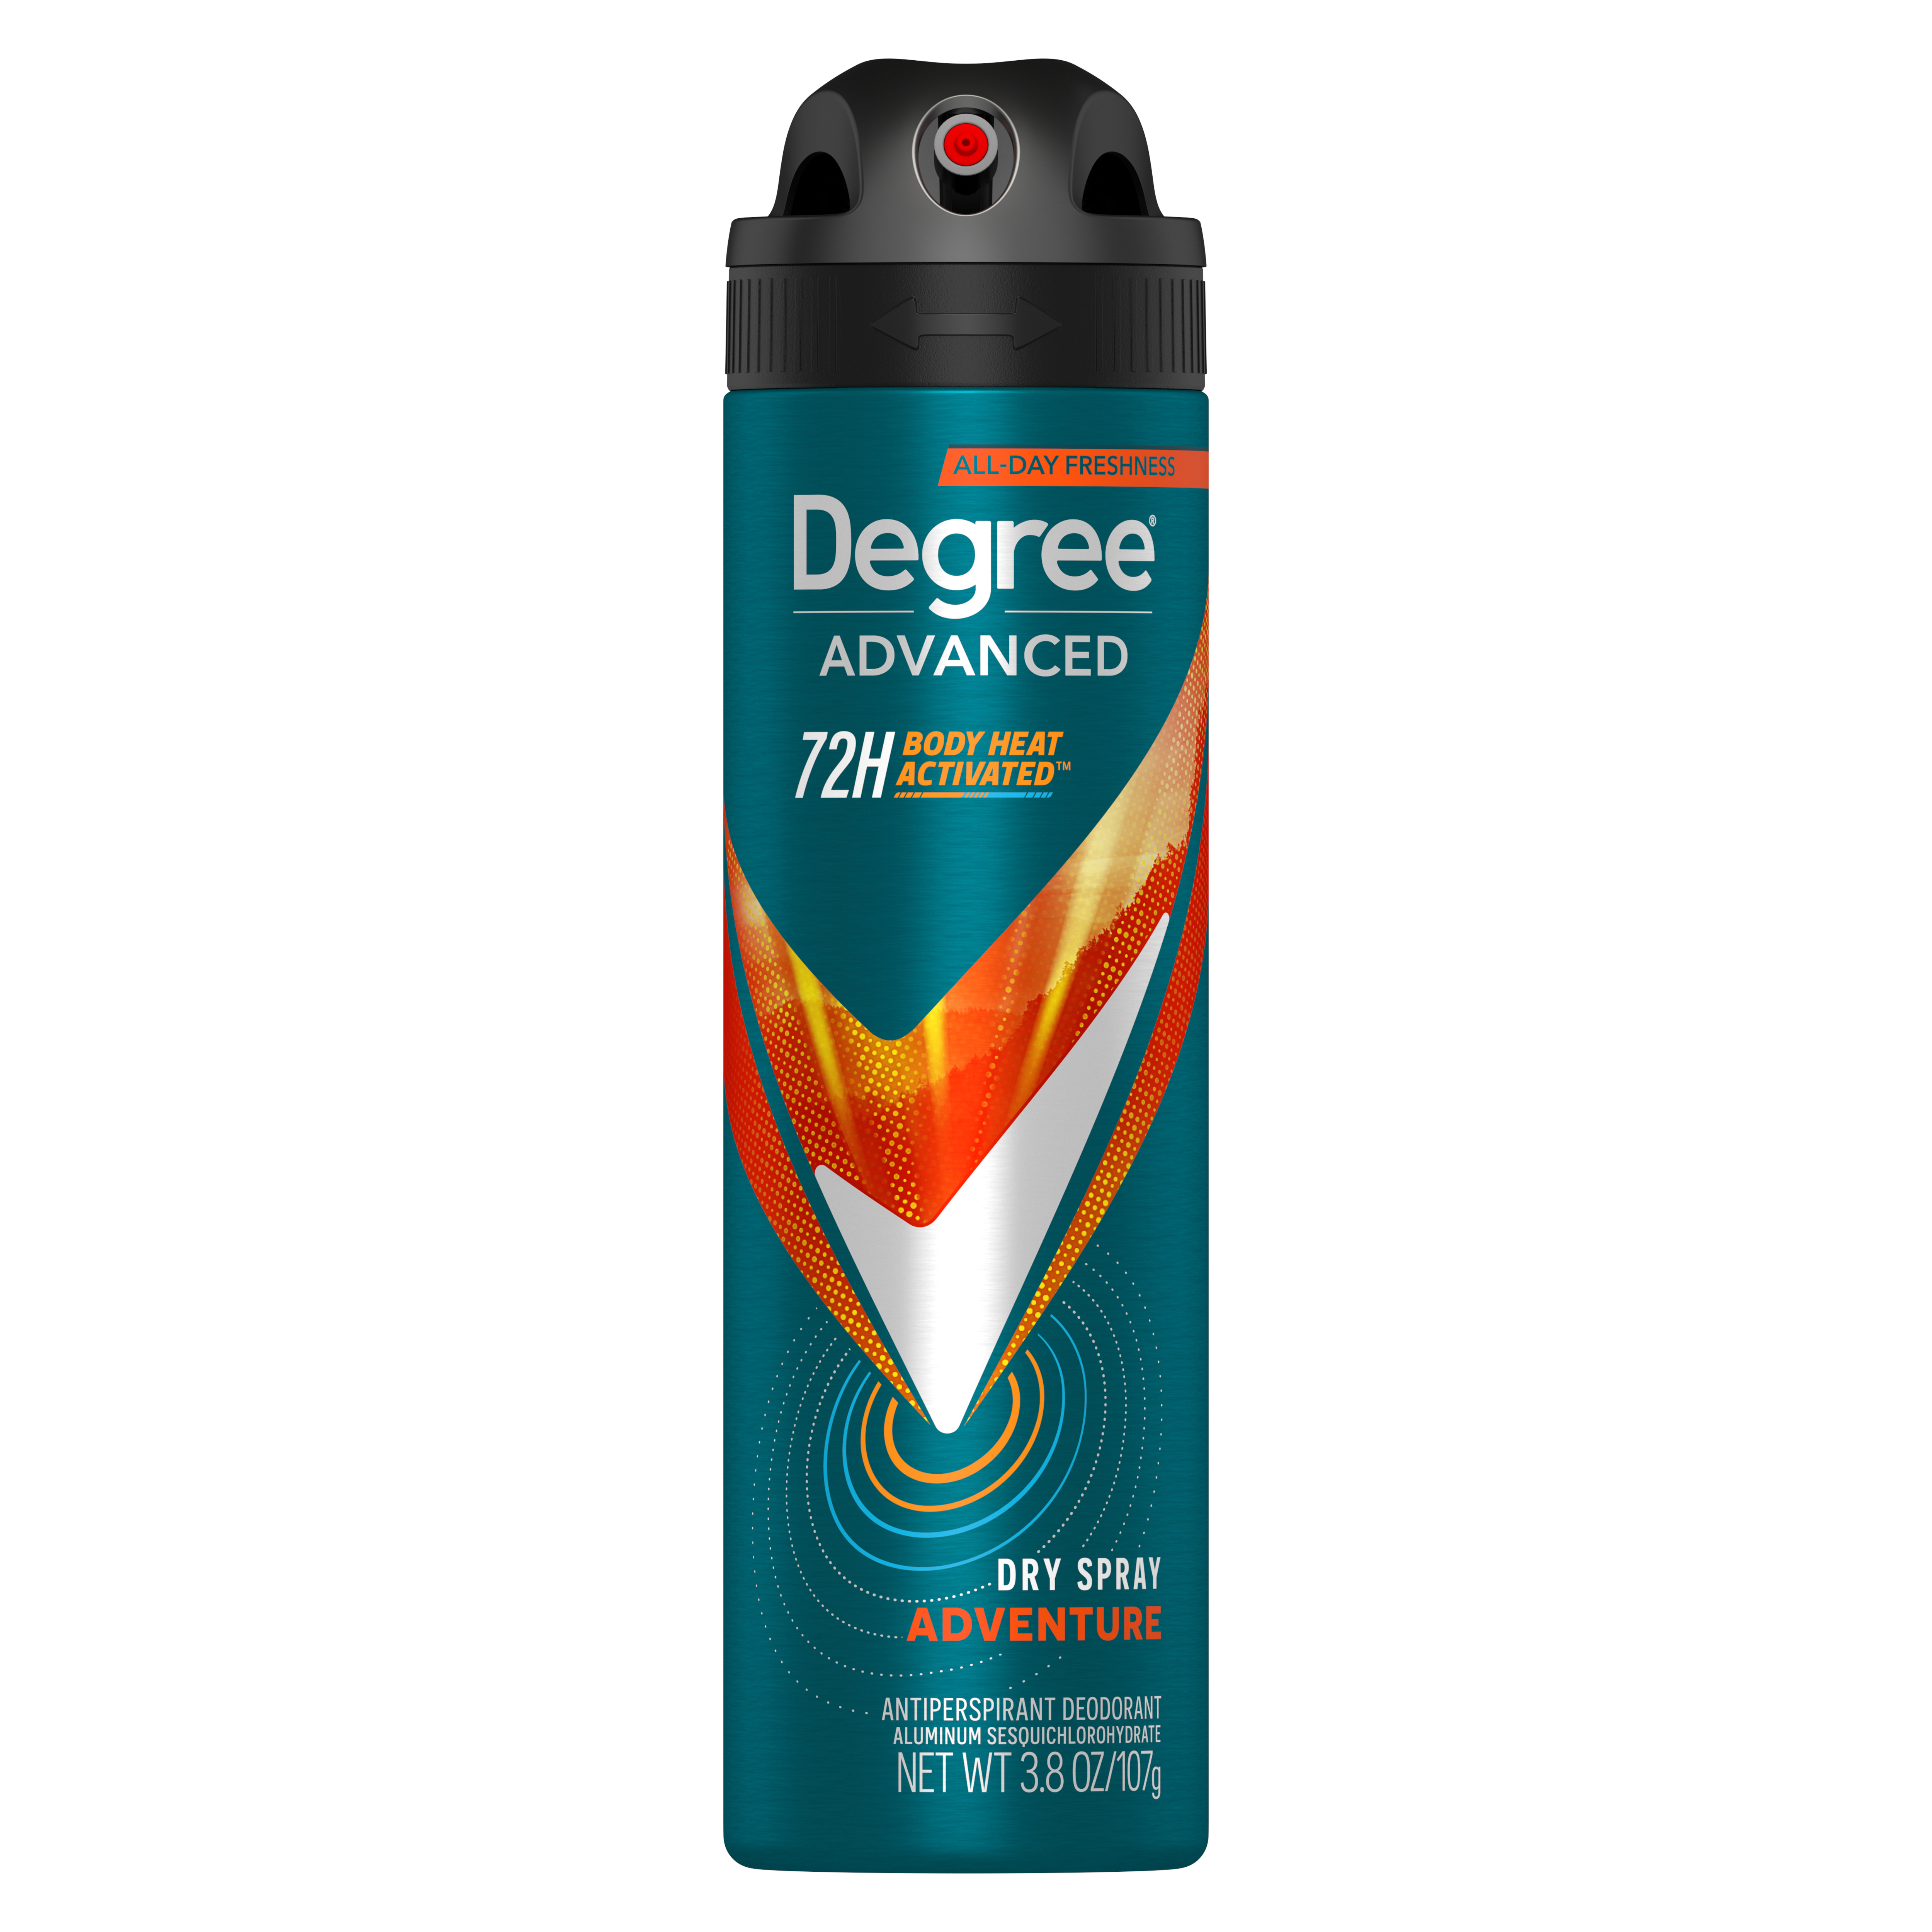 Day by Day Men's Sport Spray on Deodorant